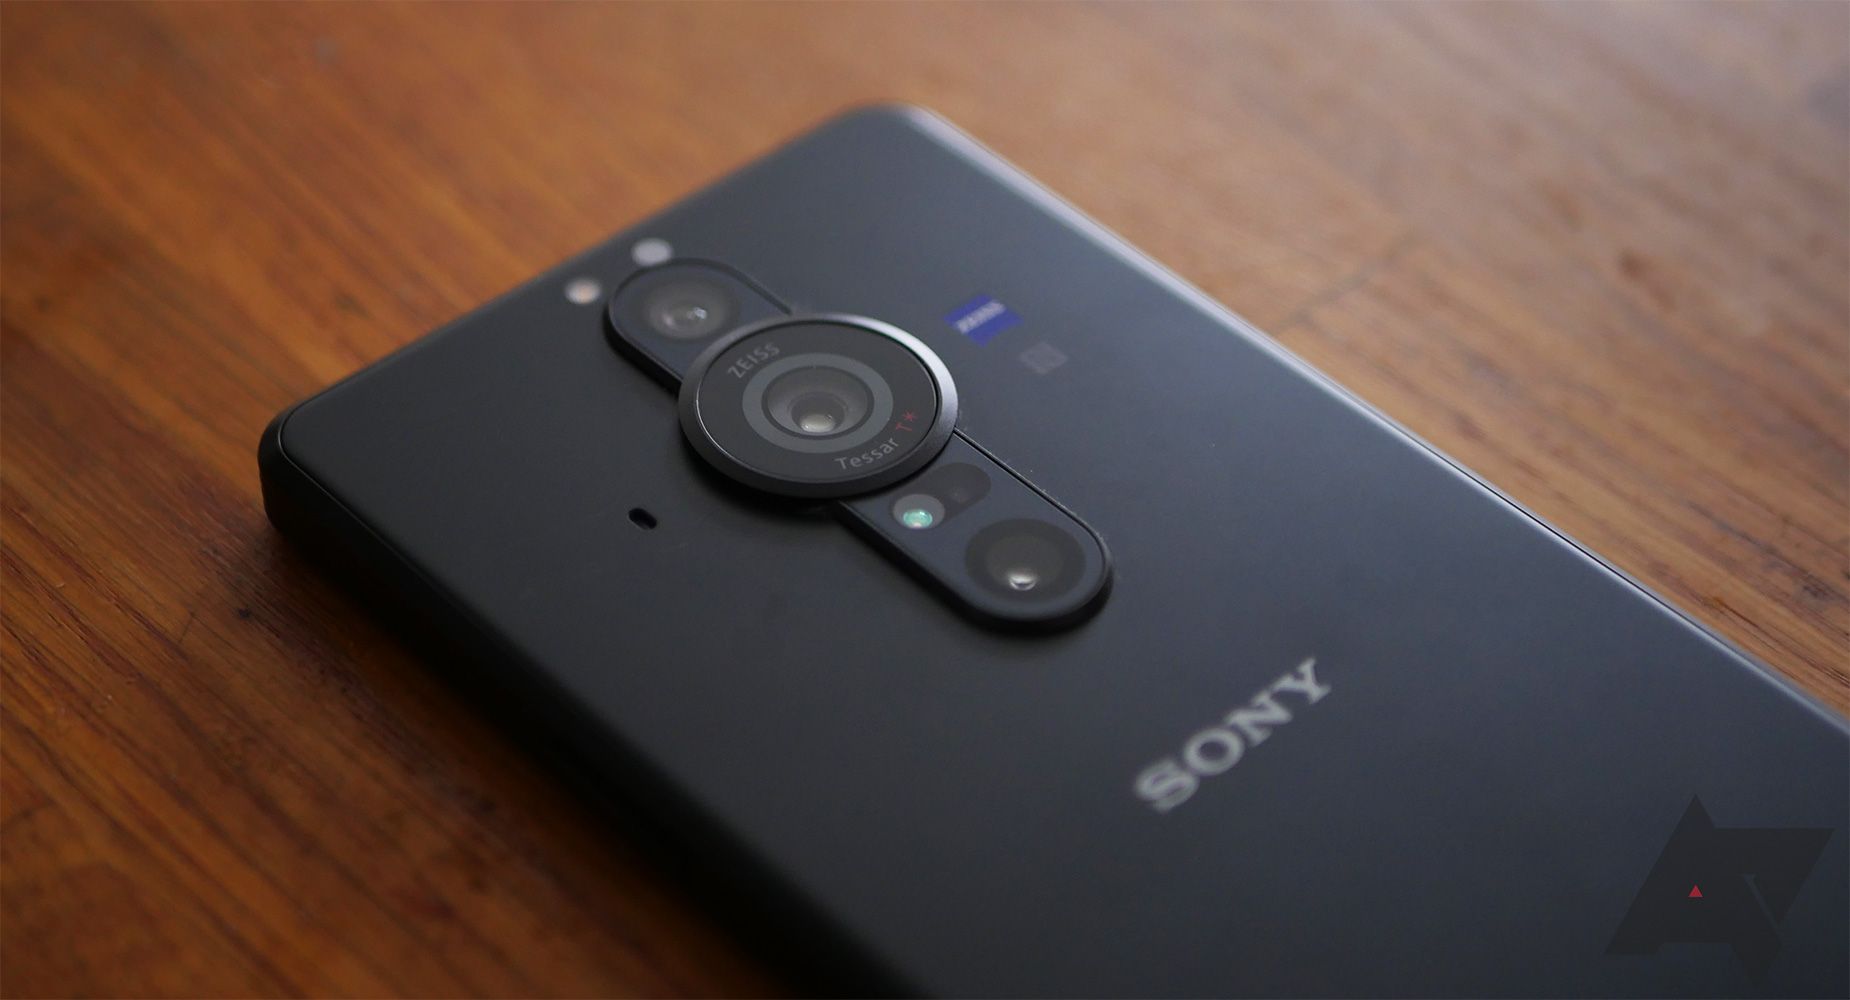 Sony one-ups Samsung with its new 1-inch smartphone camera sensor